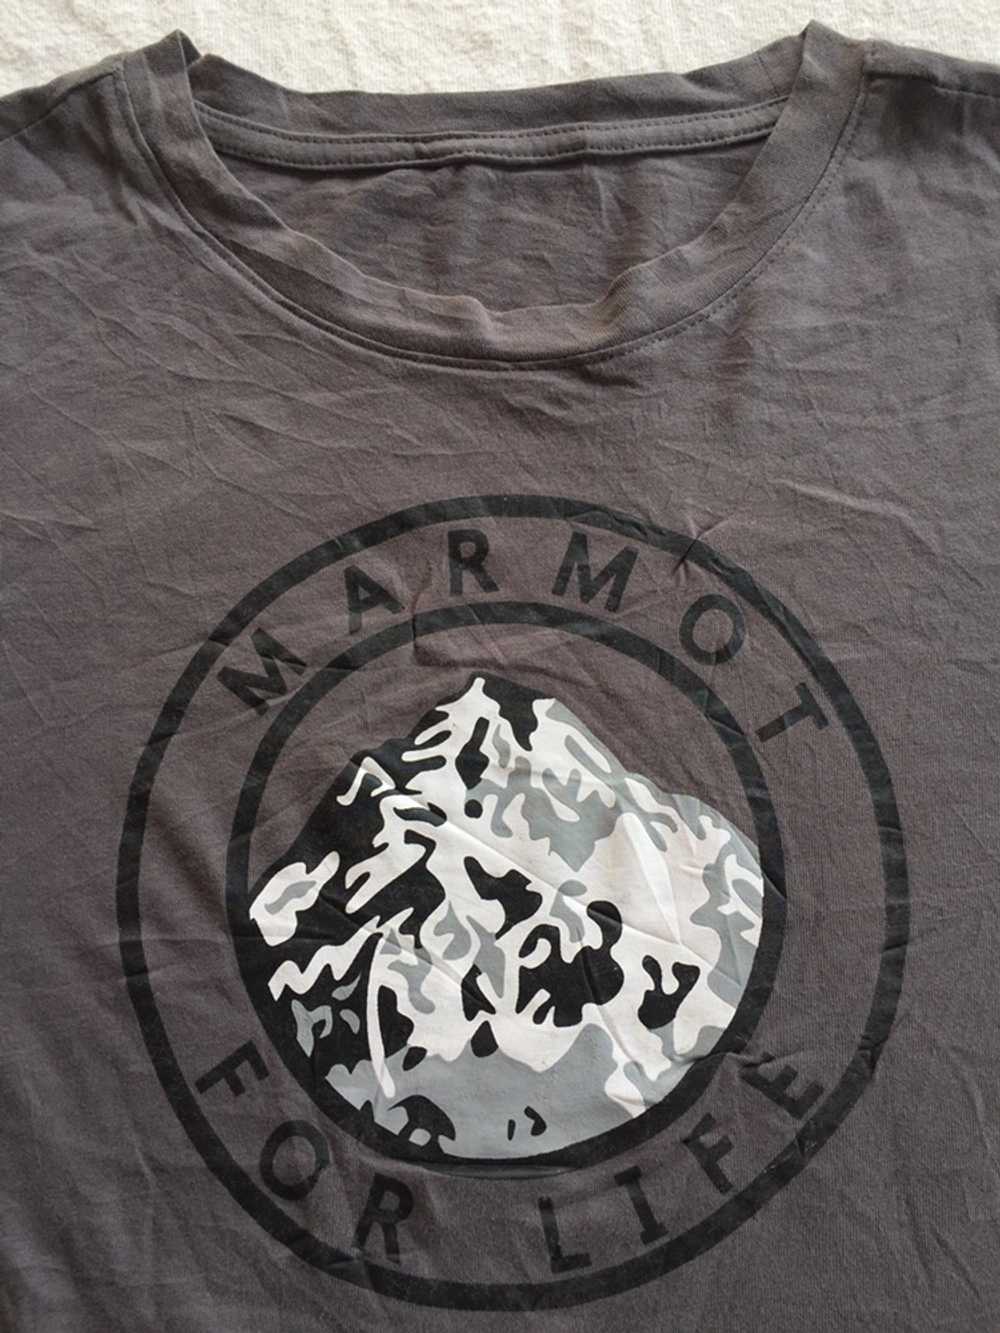 Marmot - Marmot Outdoors T shirt - image 3